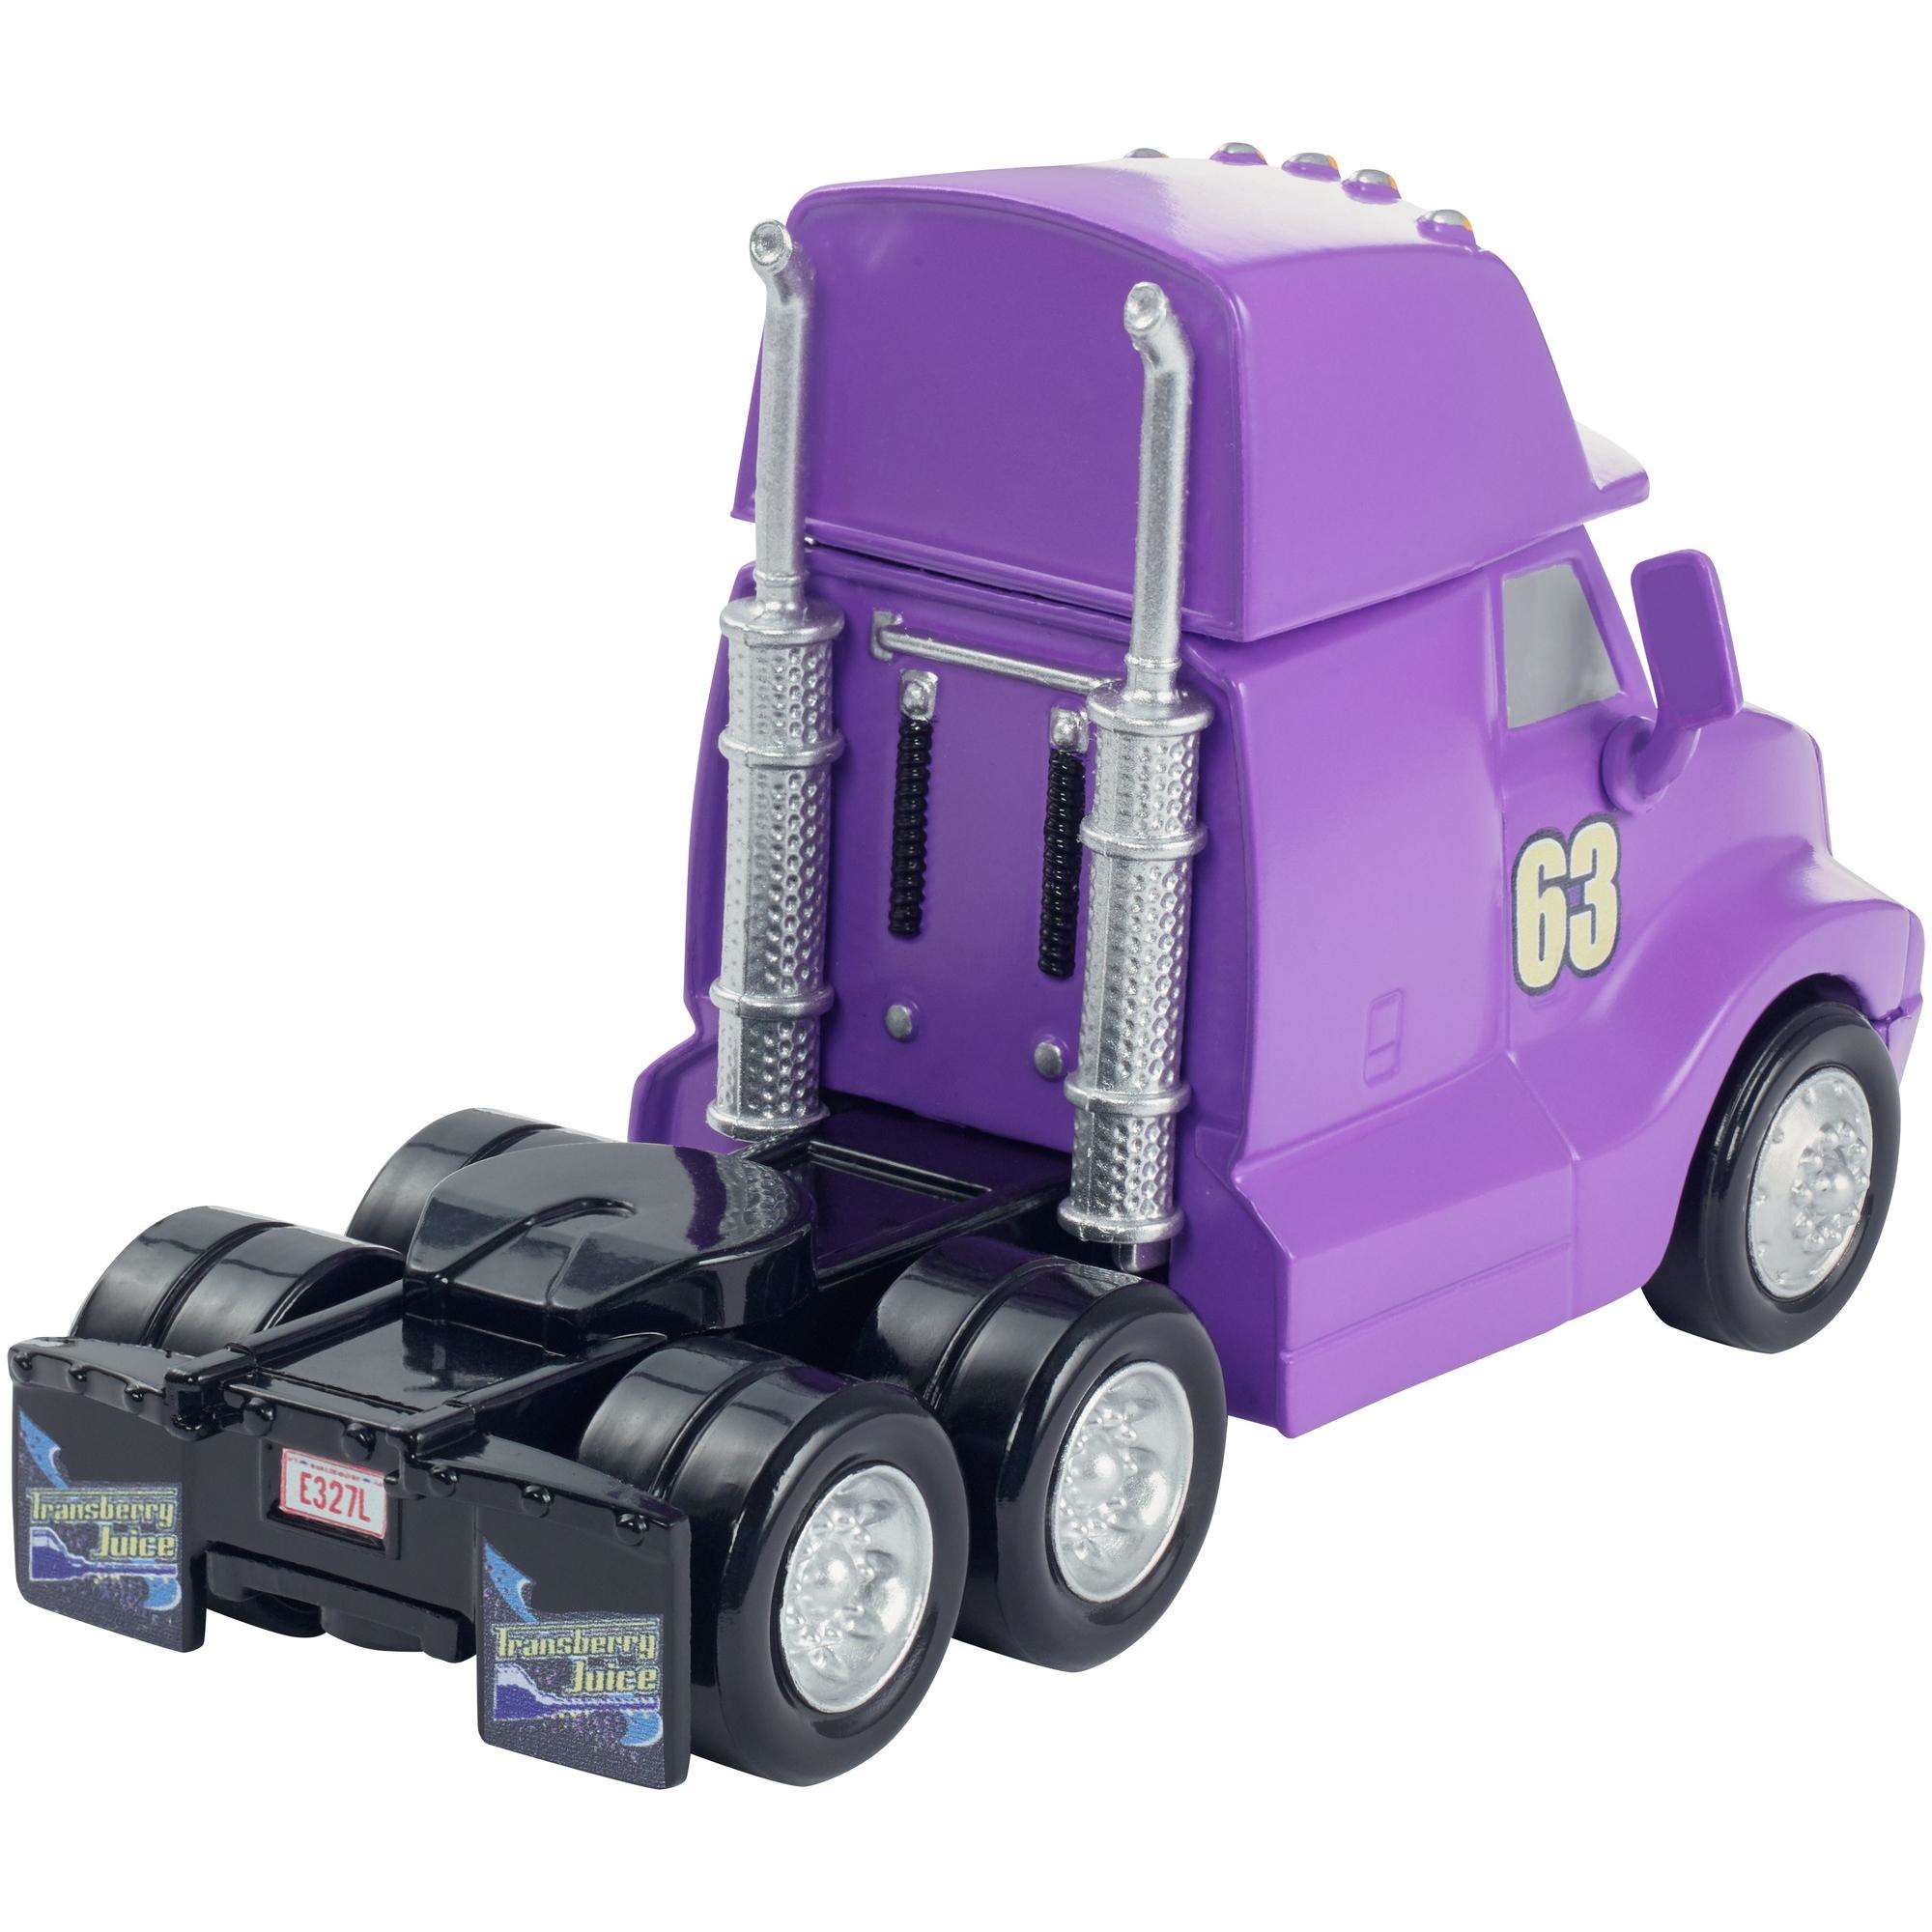 Disney/Pixar Cars Transberry Juice Cab Deluxe Die-Cast Vehicle - image 2 of 8